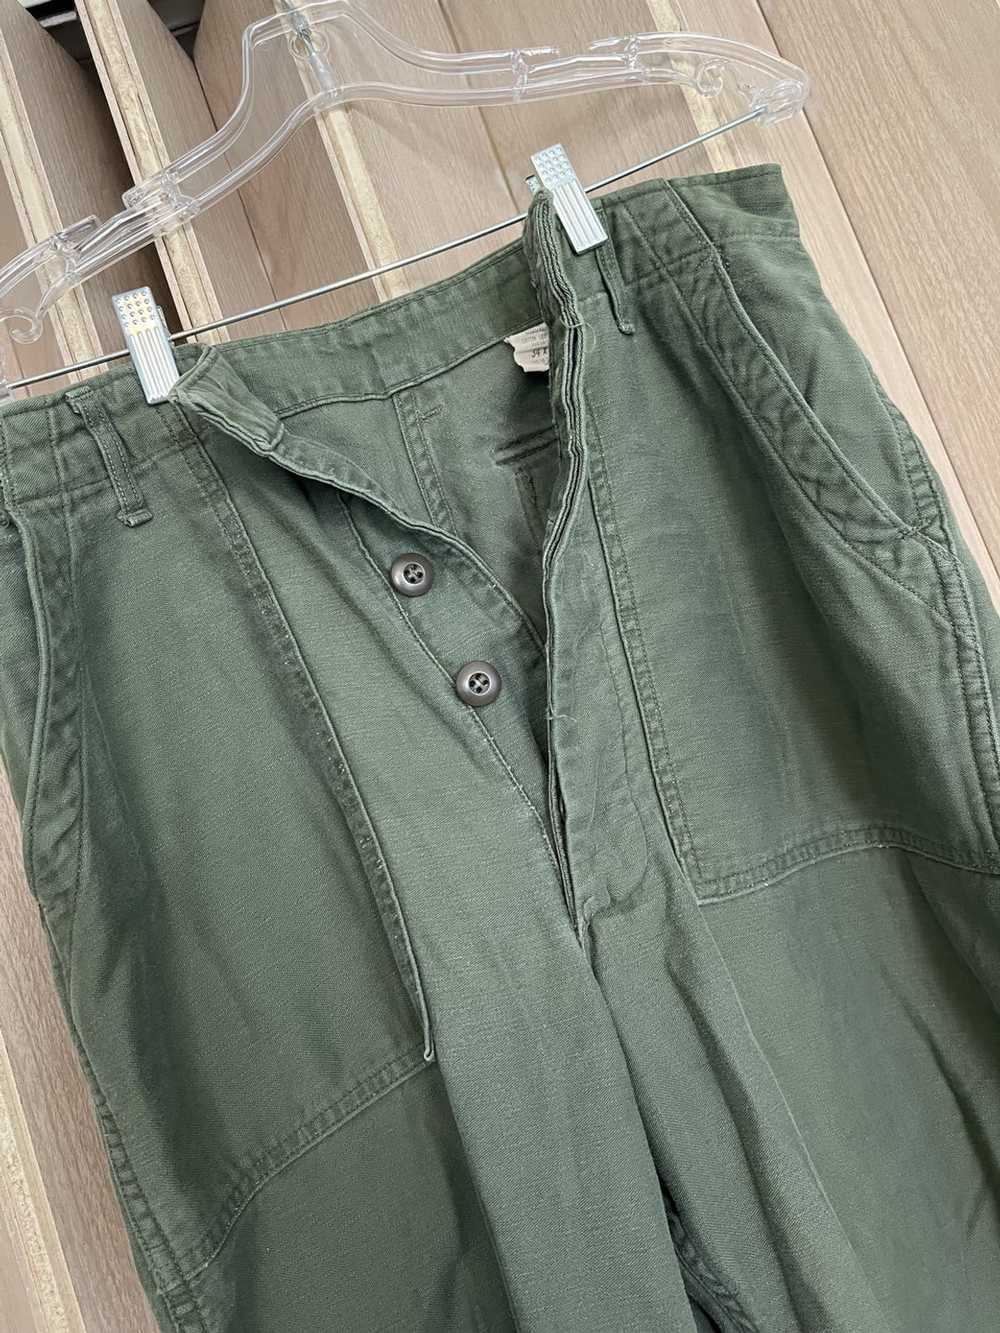 Vintage Vintage green army trouser pants - image 5